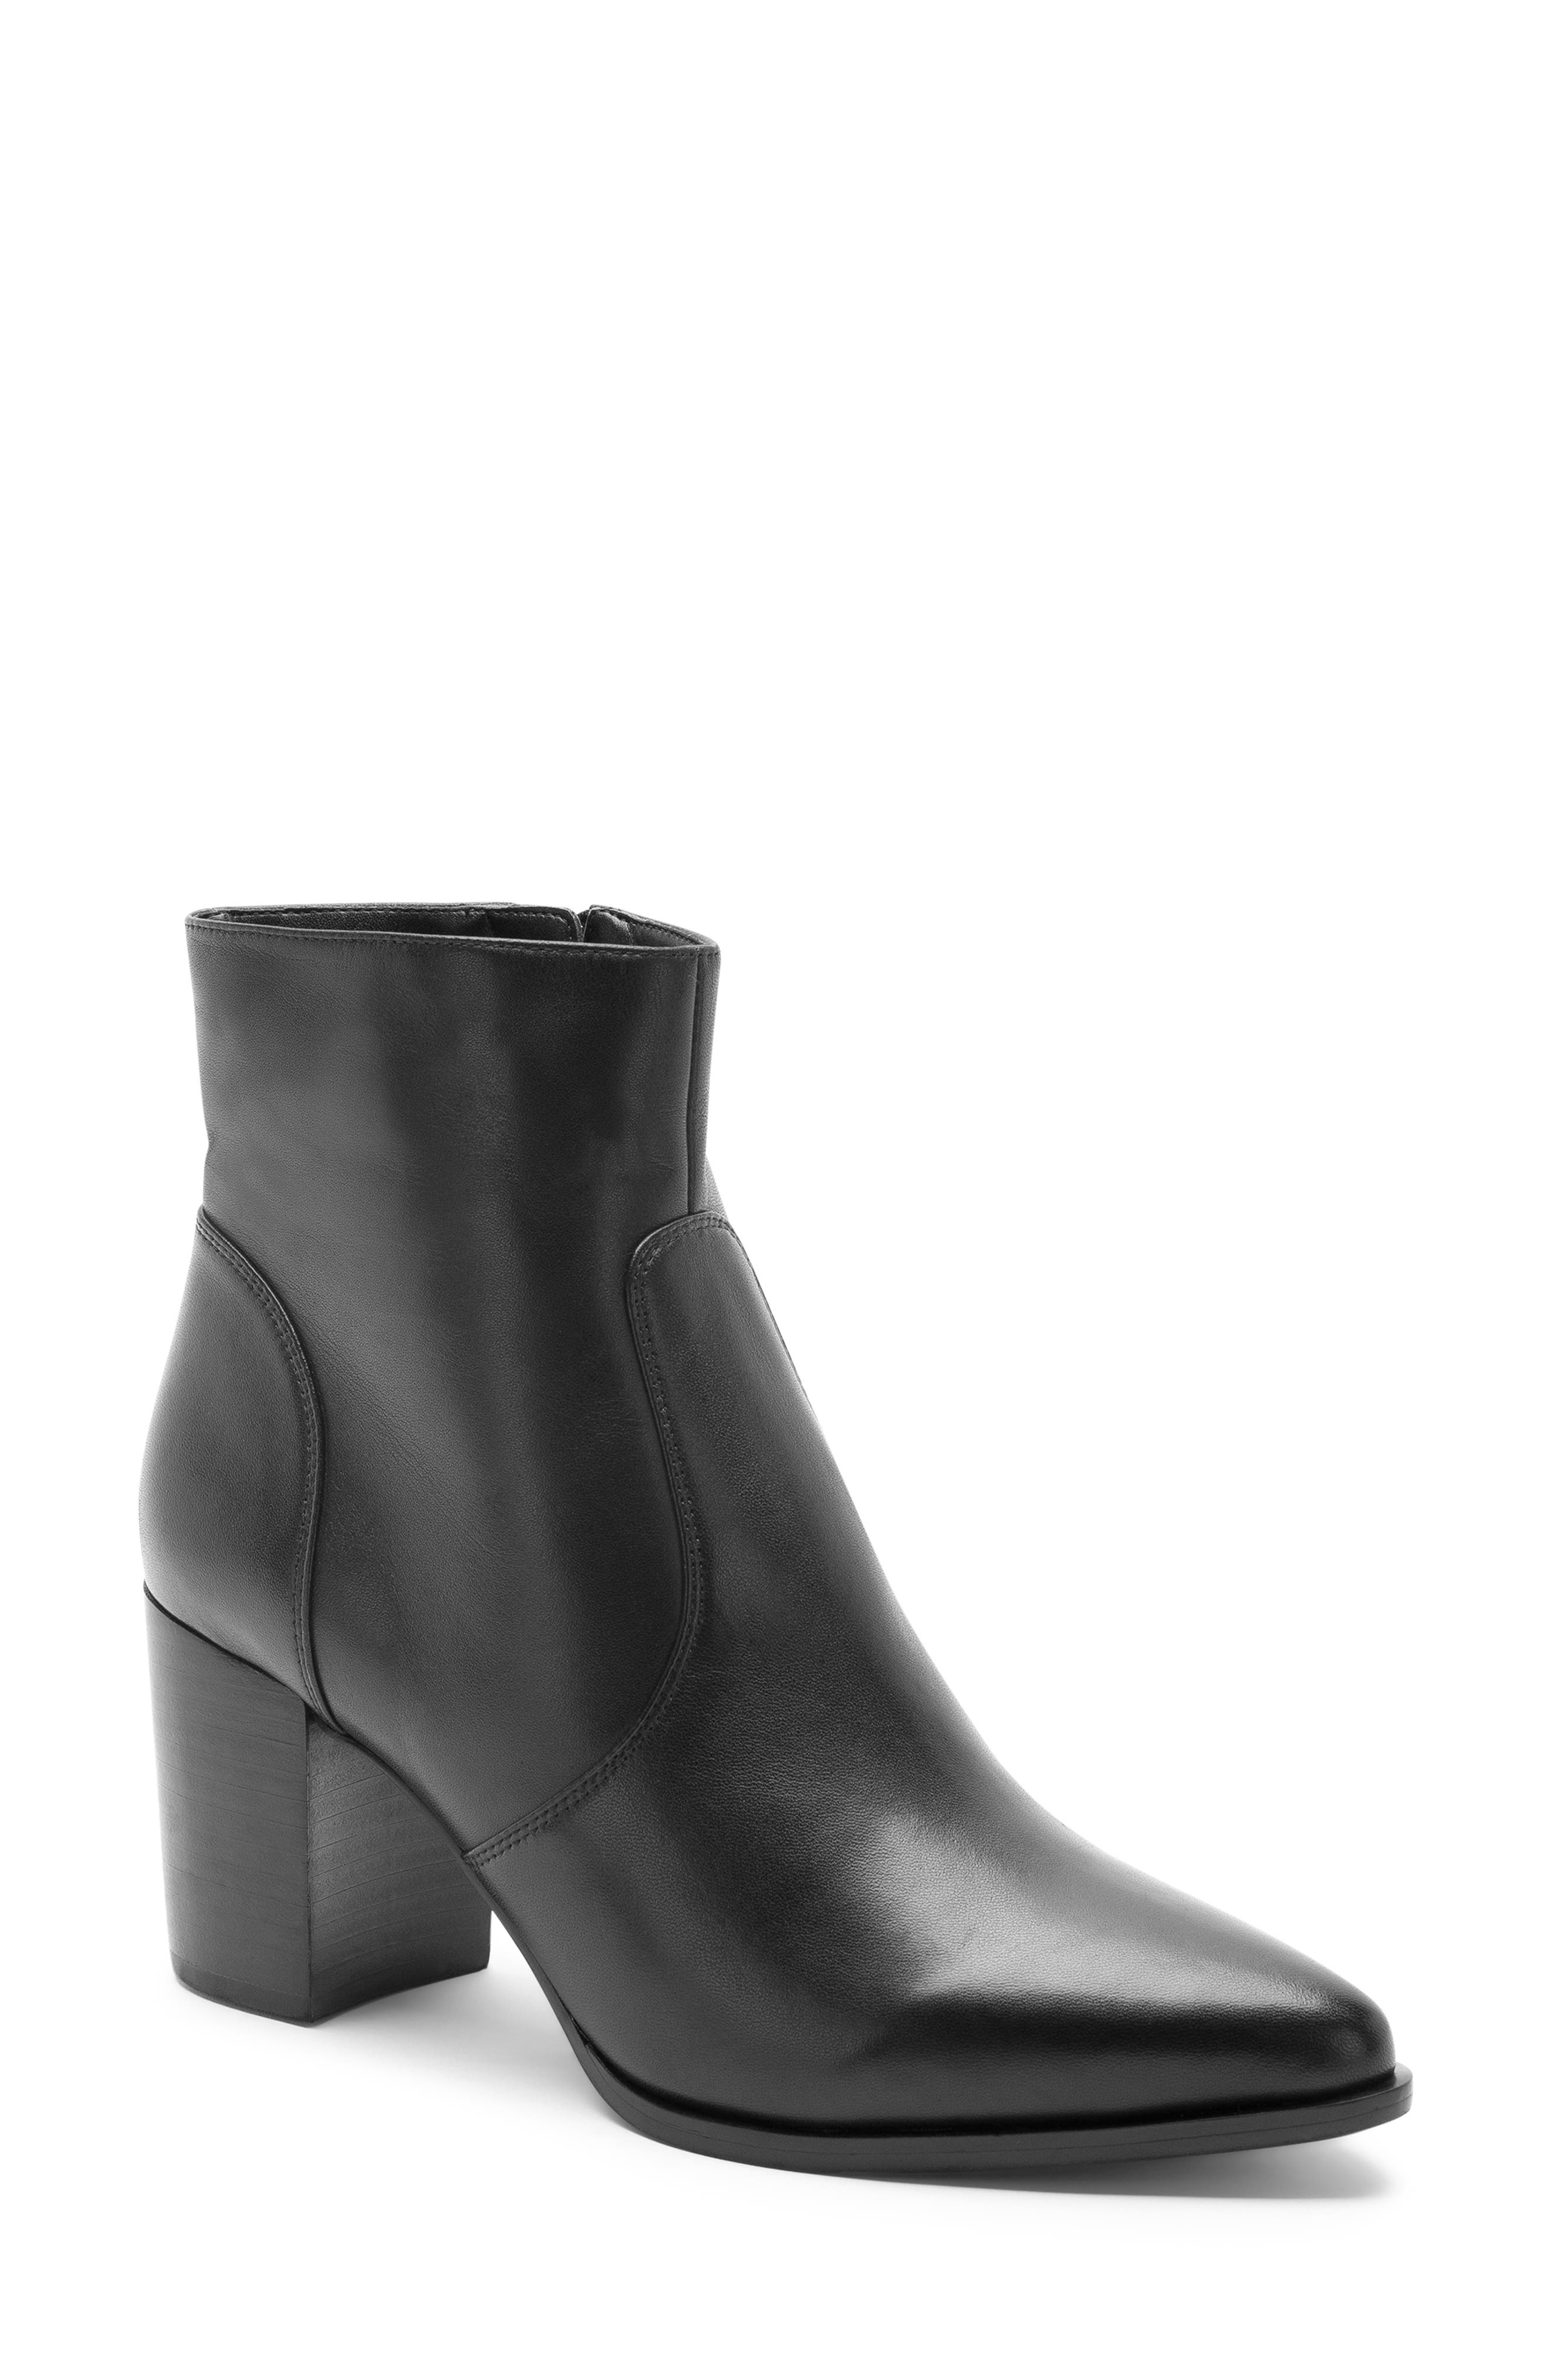 blondo waterproof leather boots